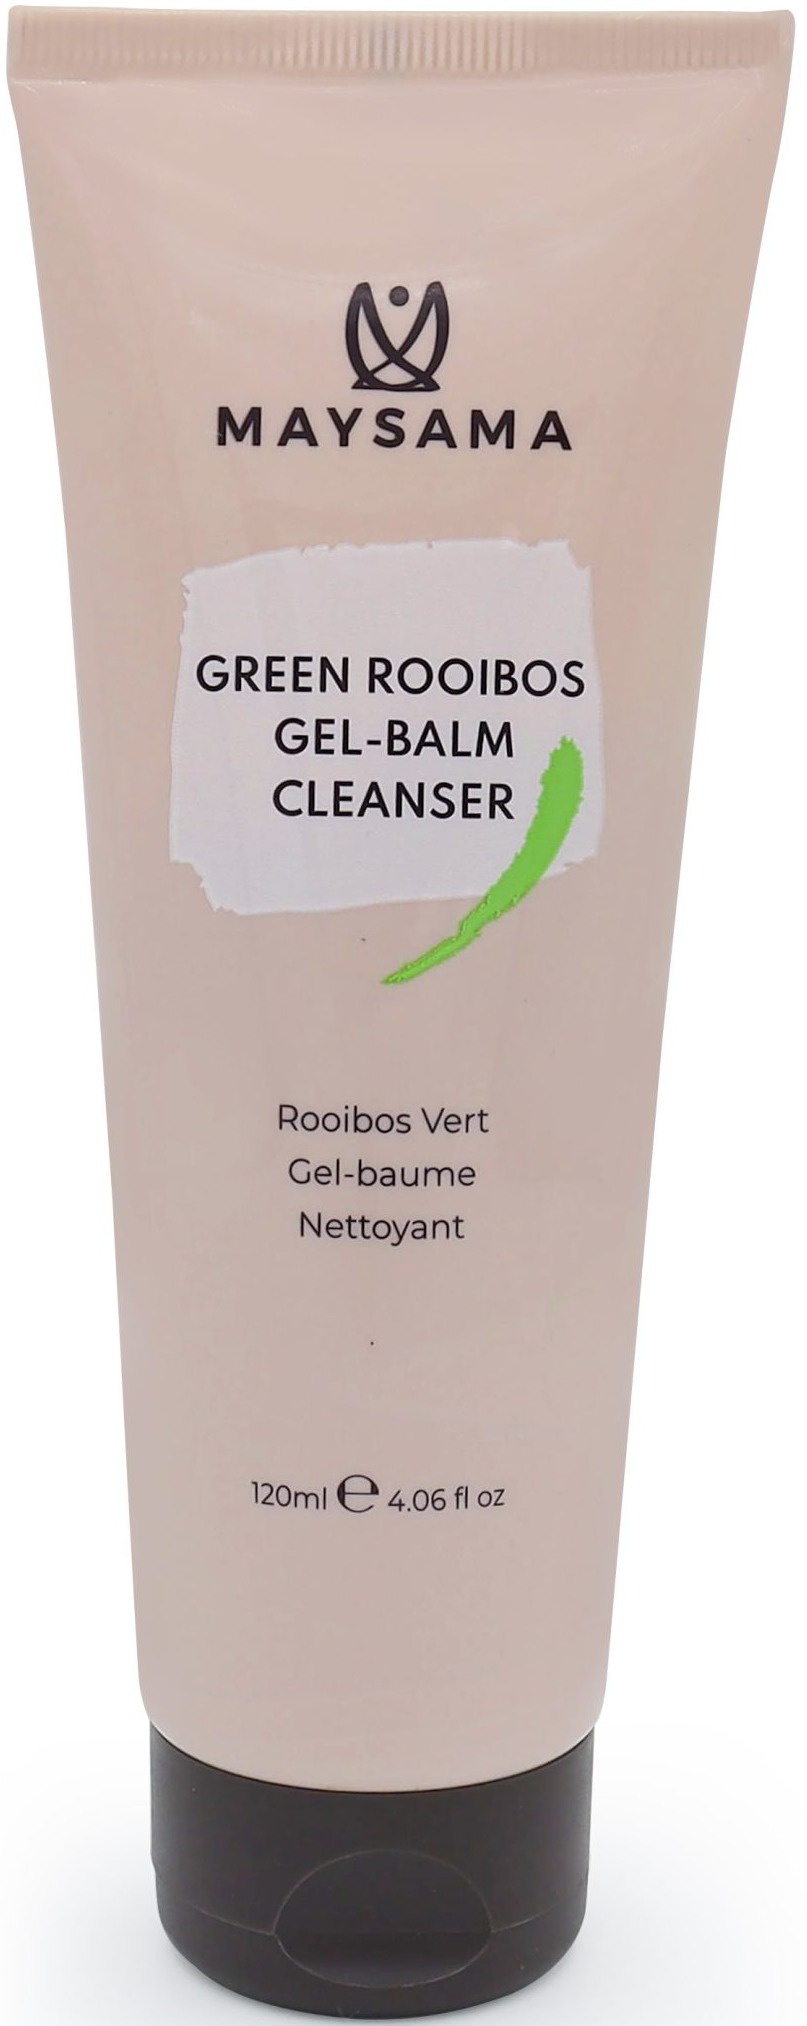 Maysama Green Rooibos Gel-Balm Cleanser